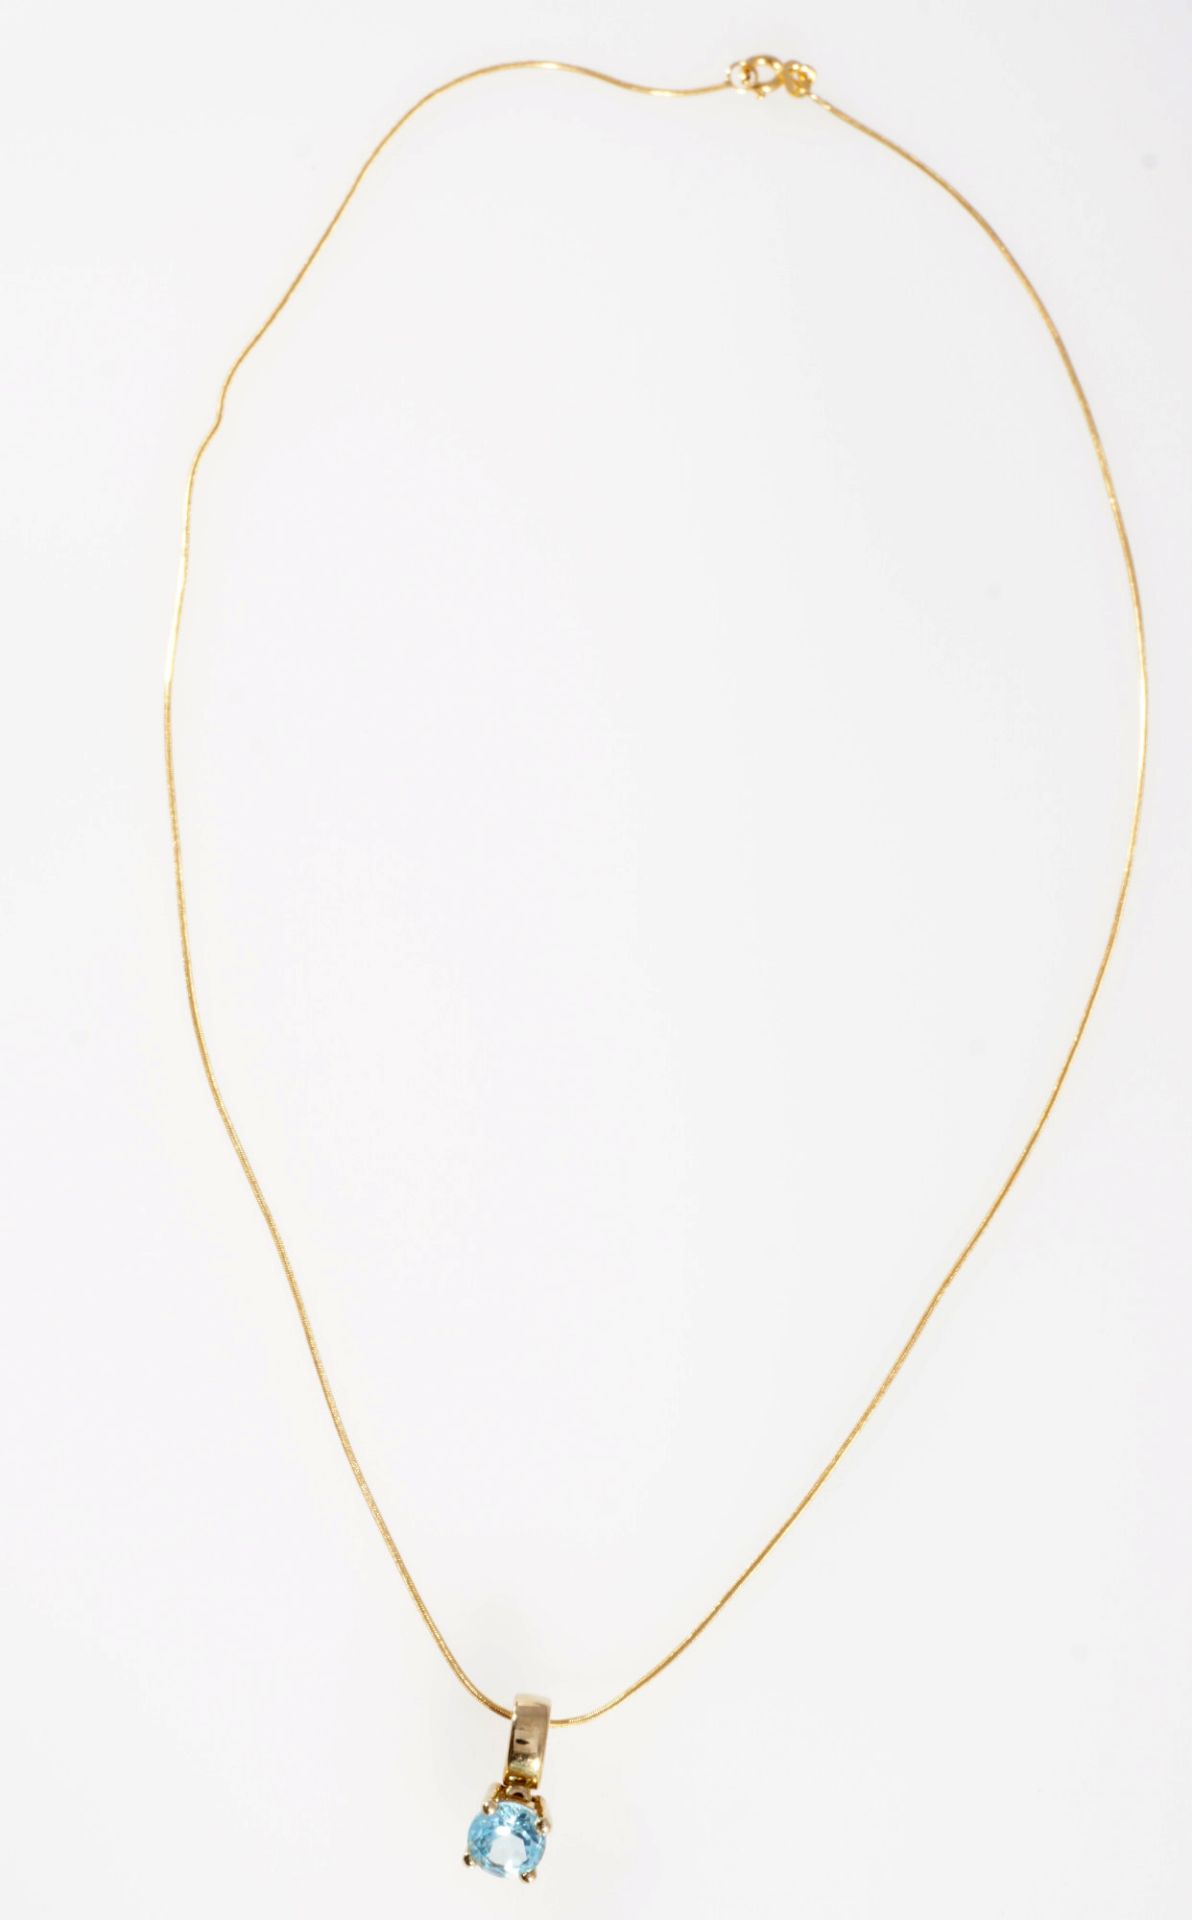 333 Gold Collier mit Aquamarin, 8K gold necklace with aquamarine, - Bild 3 aus 4